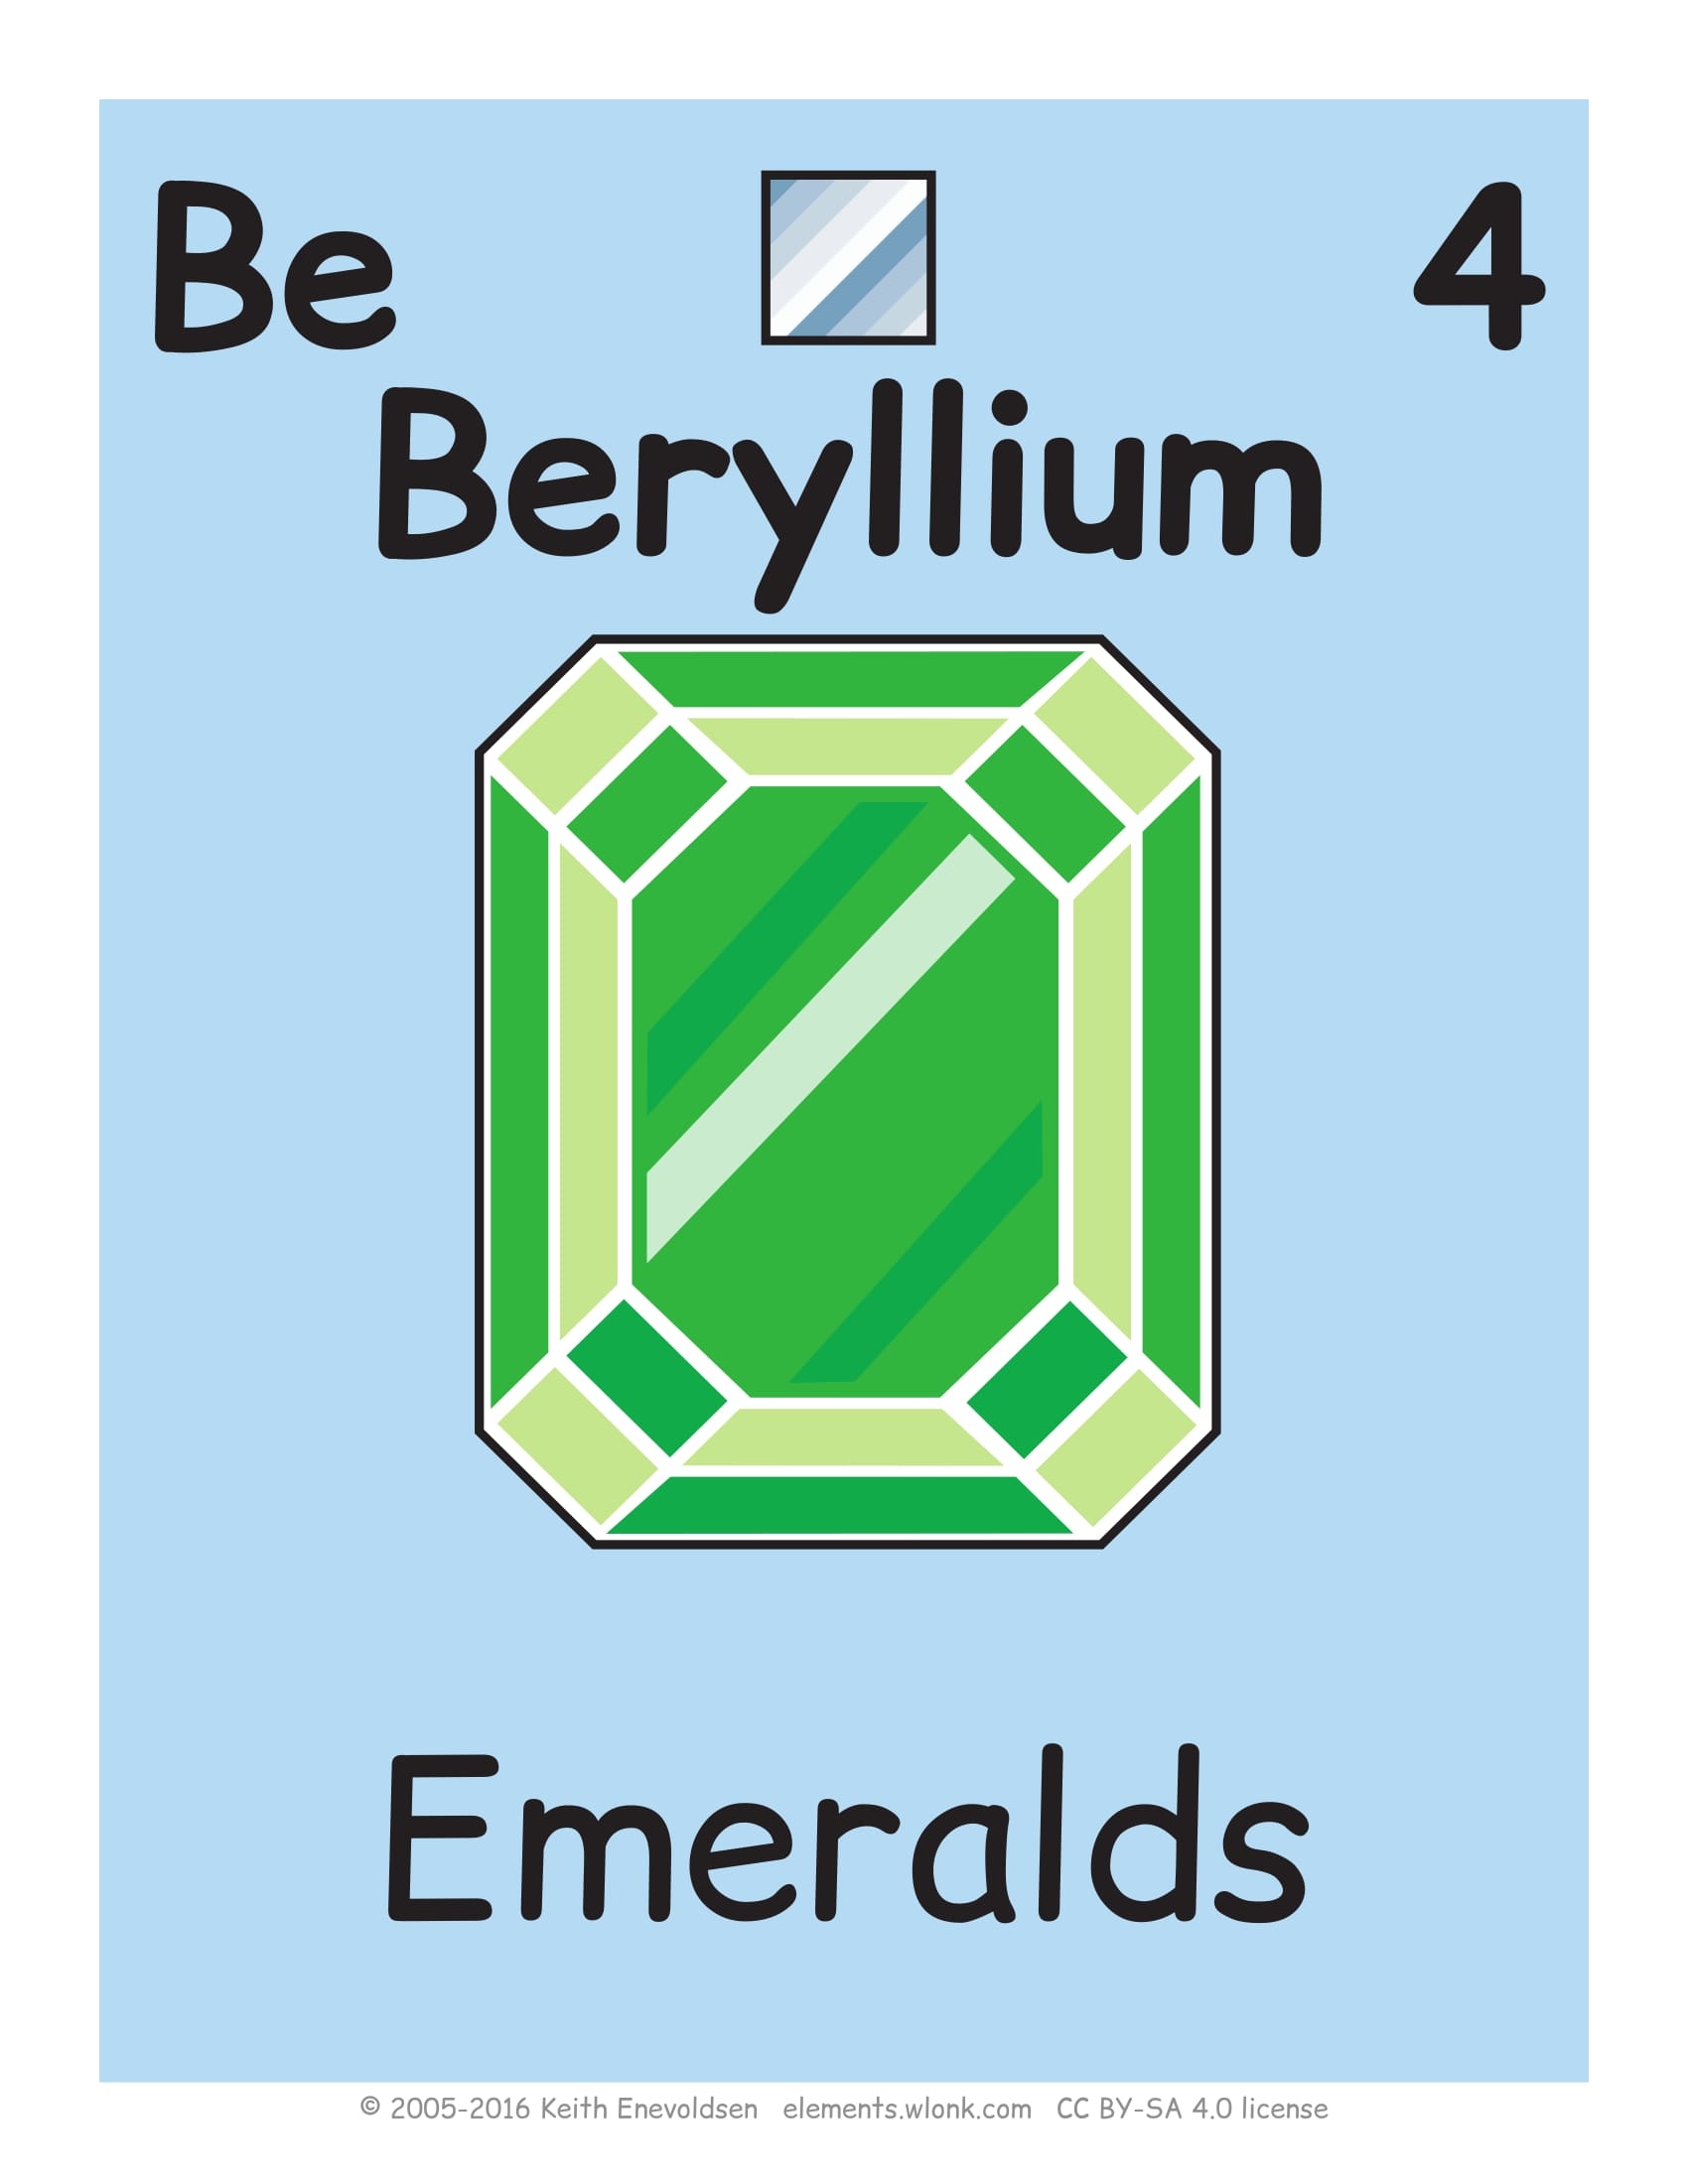 Beryllium chemical element flashcard free printable papercraft templates